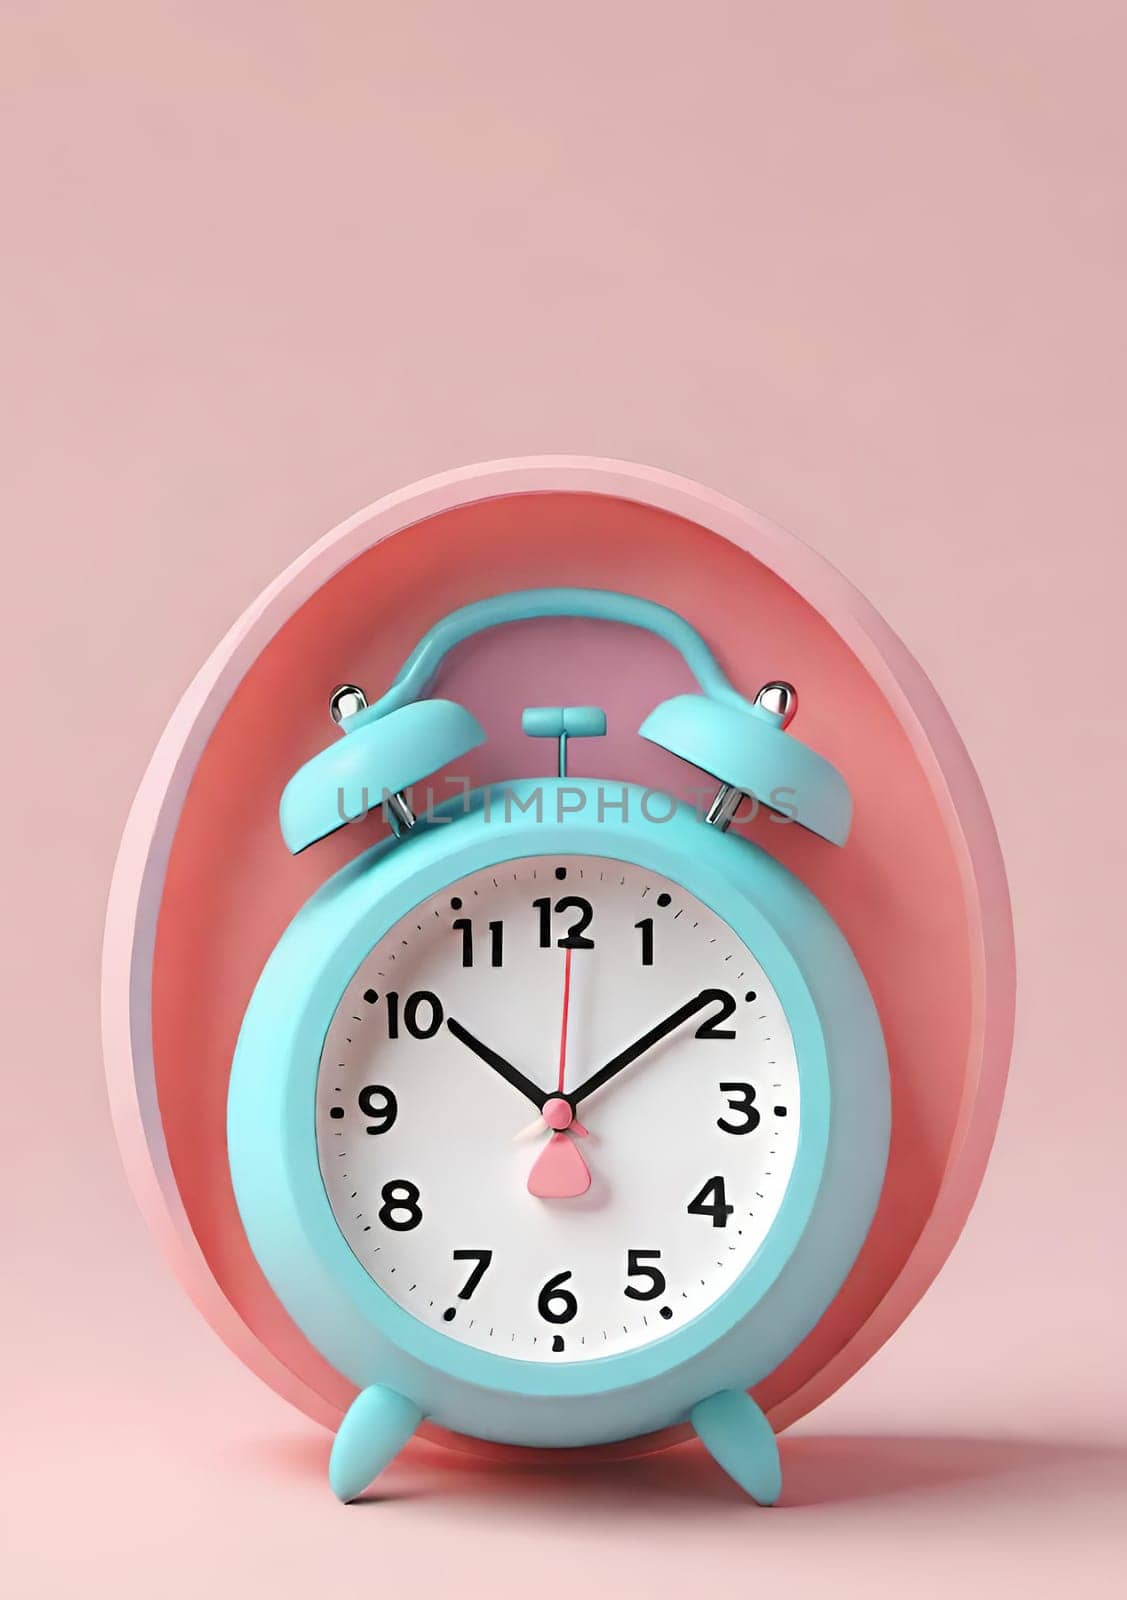 Retro alarm clock on a background. by yilmazsavaskandag